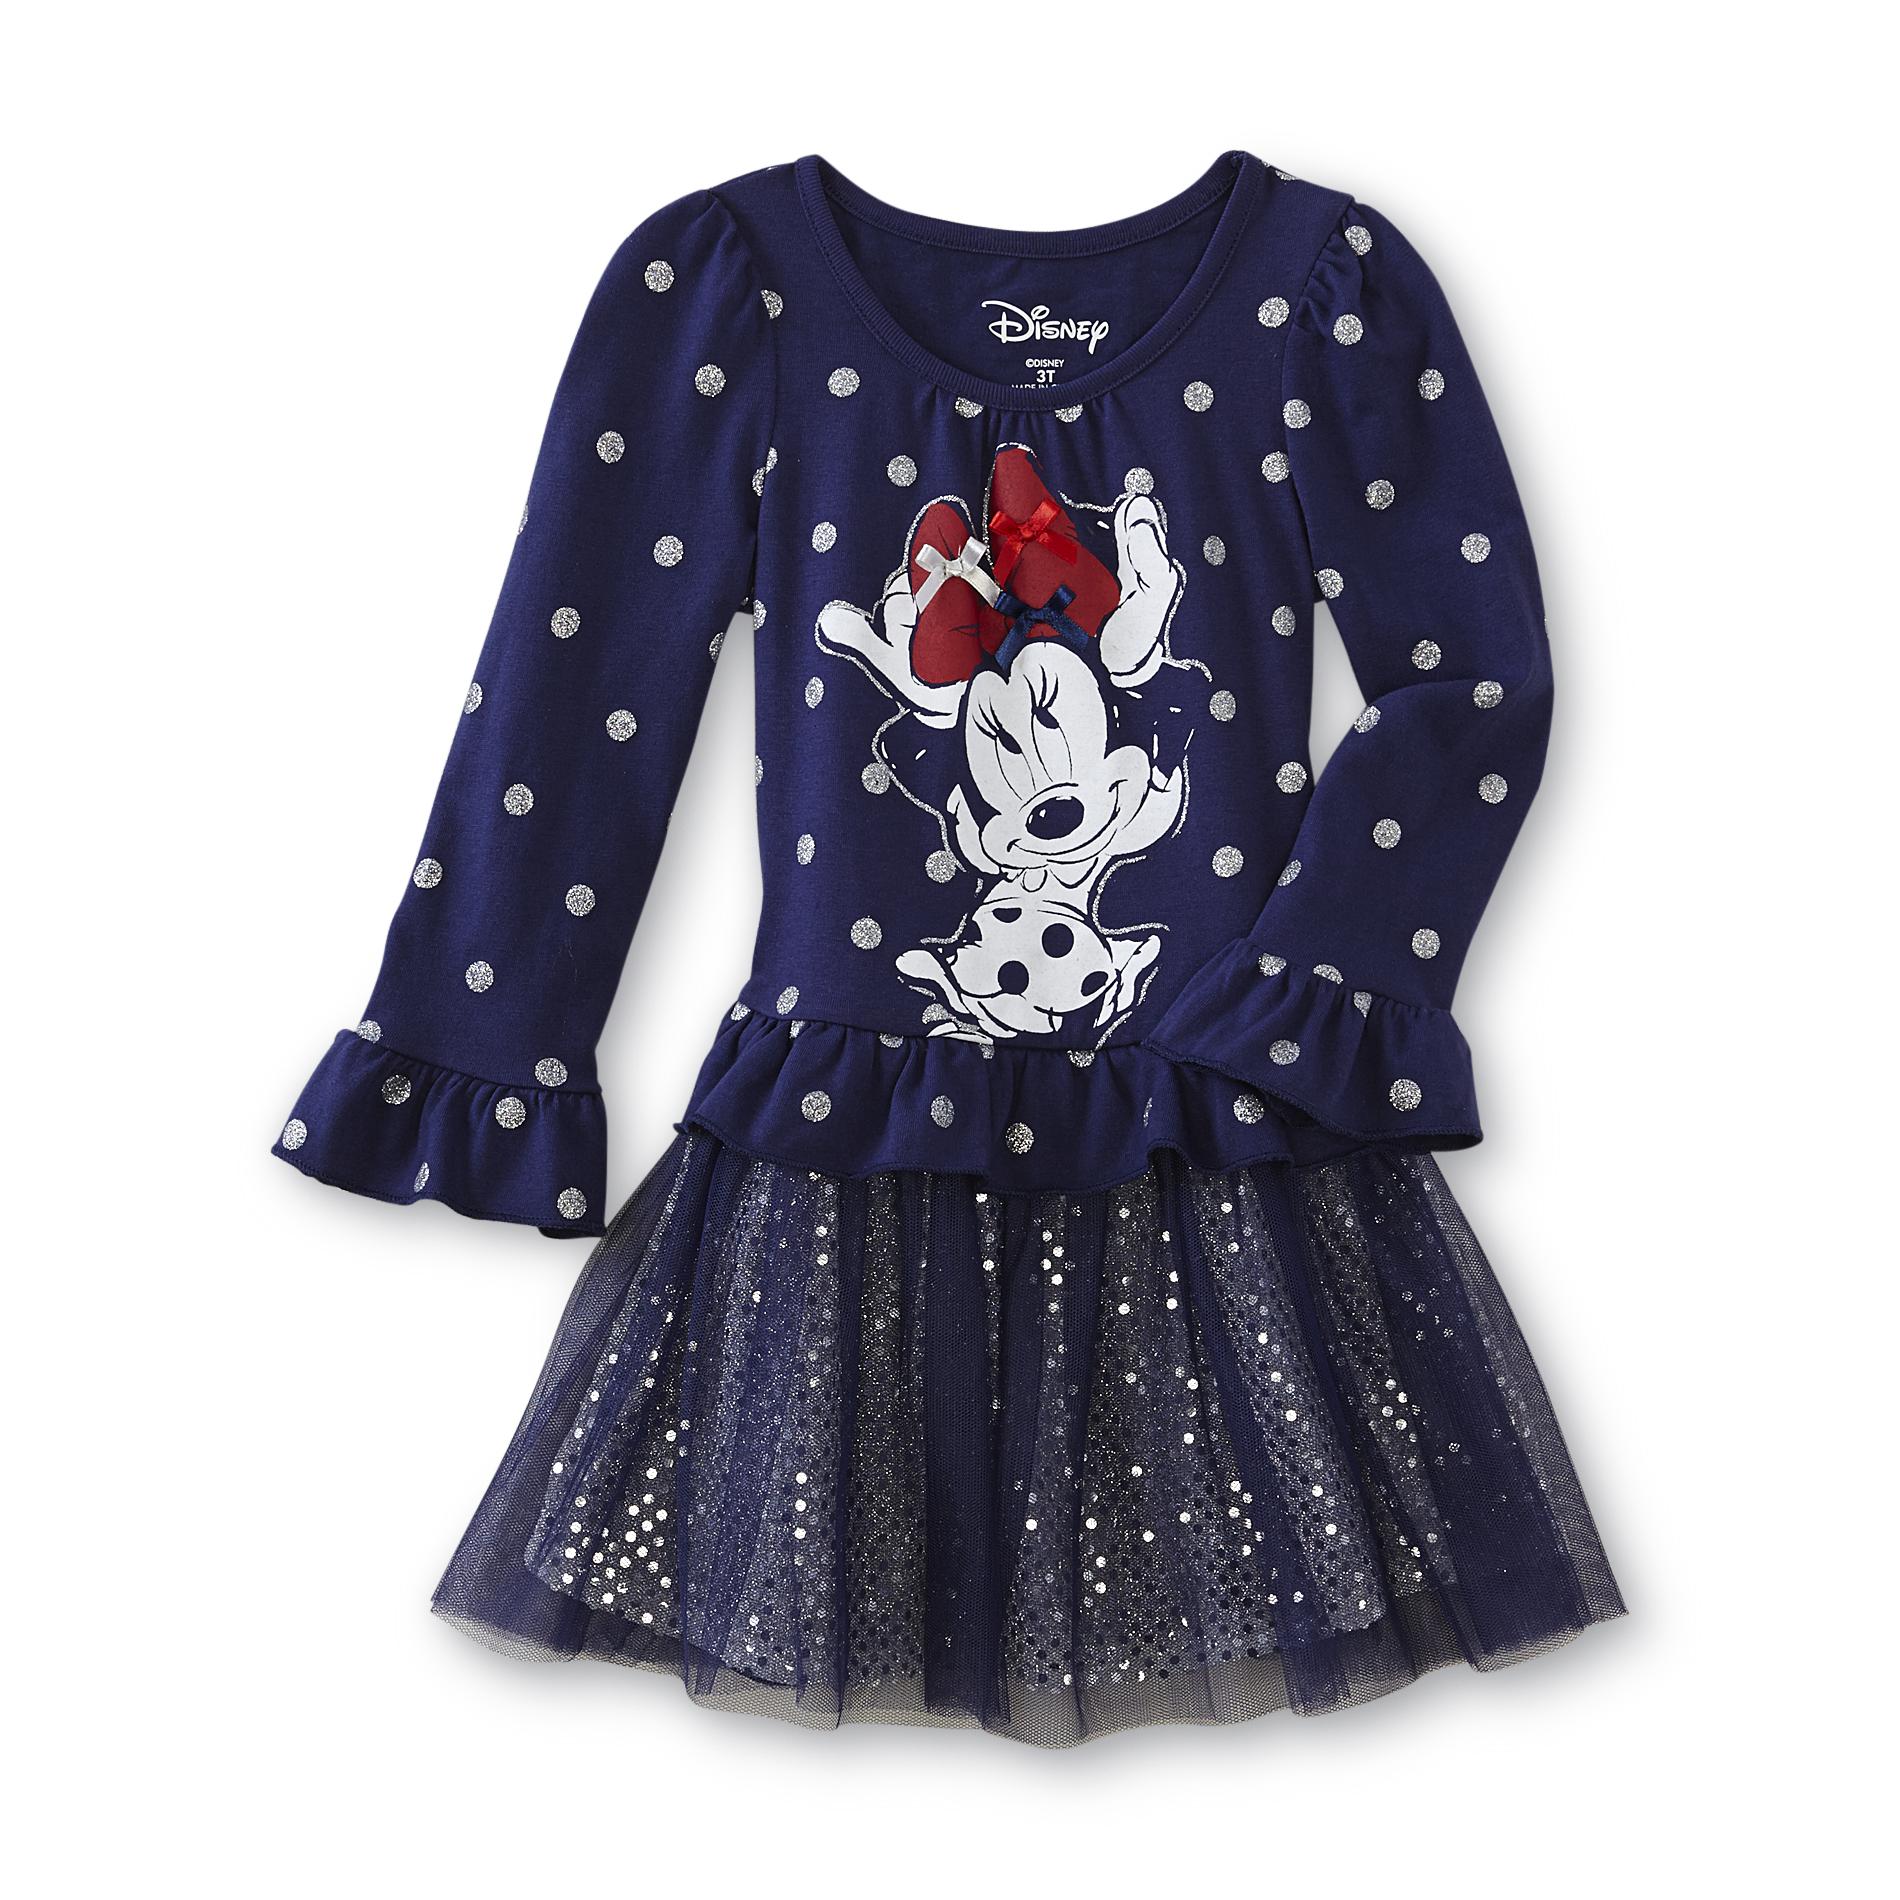 Disney Minnie Mouse Toddler Girl's Dress - Polka Dot